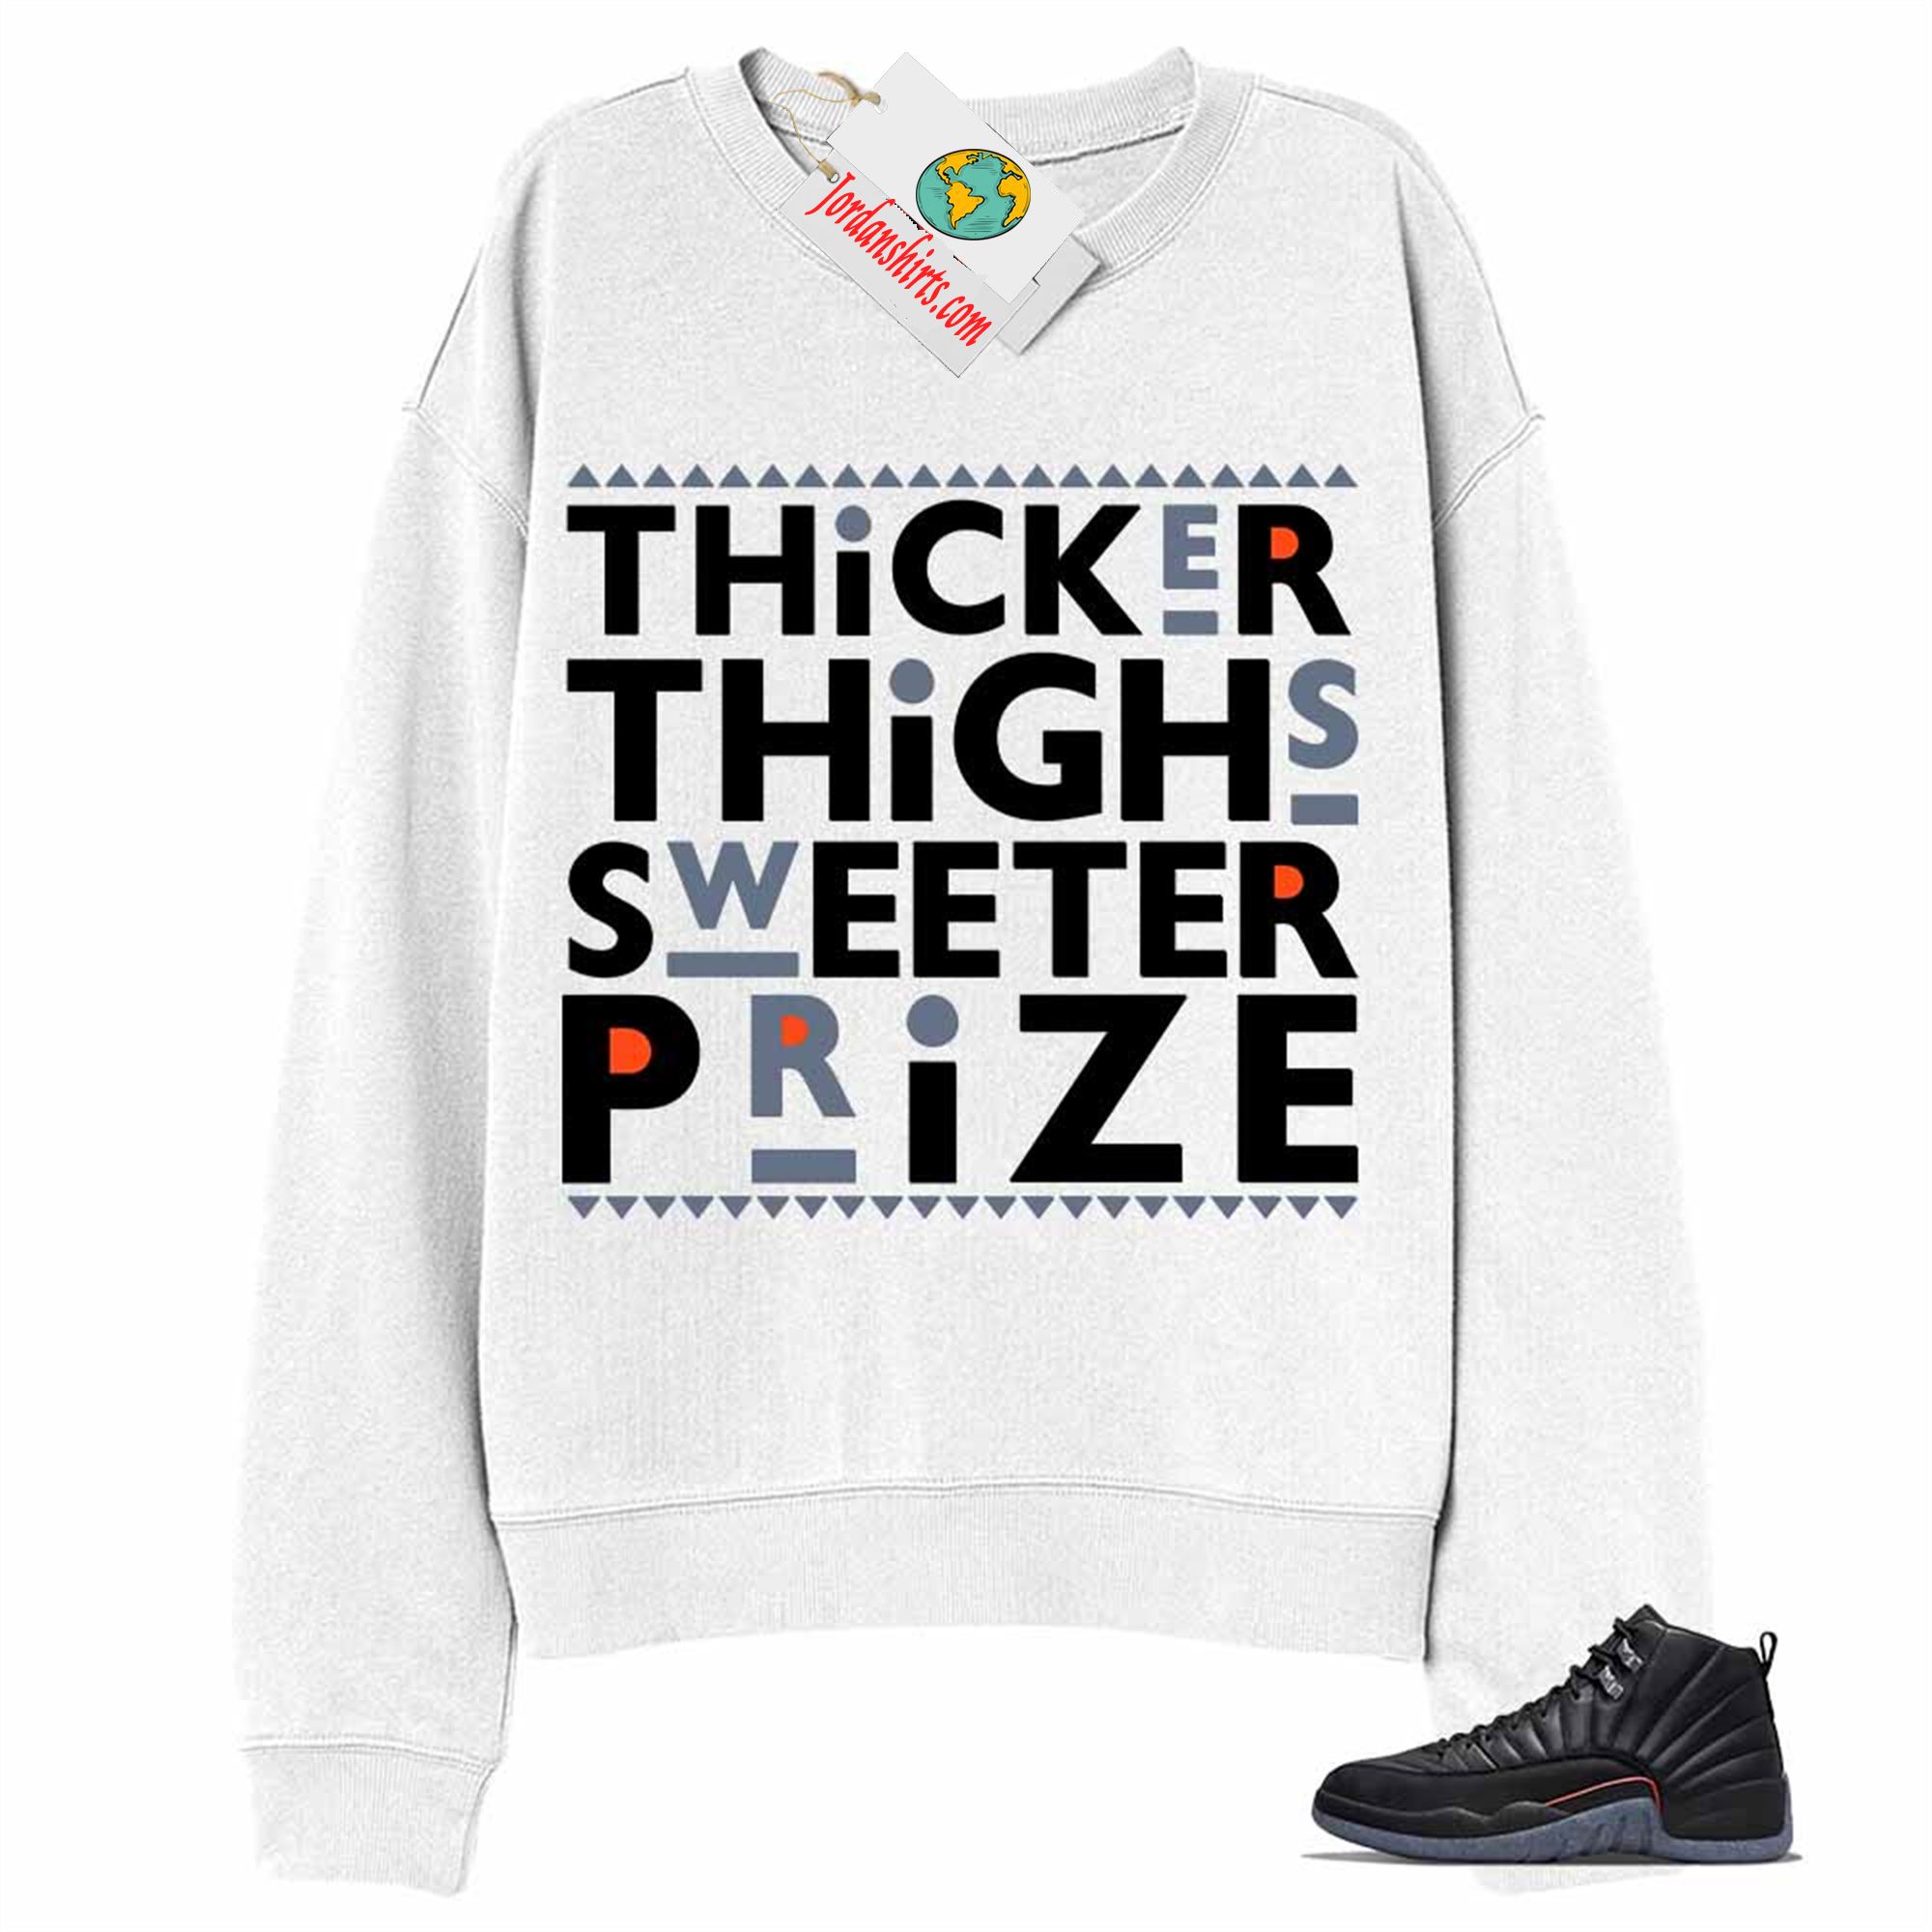 Jordan 12 Sweatshirt, Thicker Thighs Sweeter Prize White Sweatshirt Air Jordan 12 Utility Grind 12s Plus Size Up To 5xl